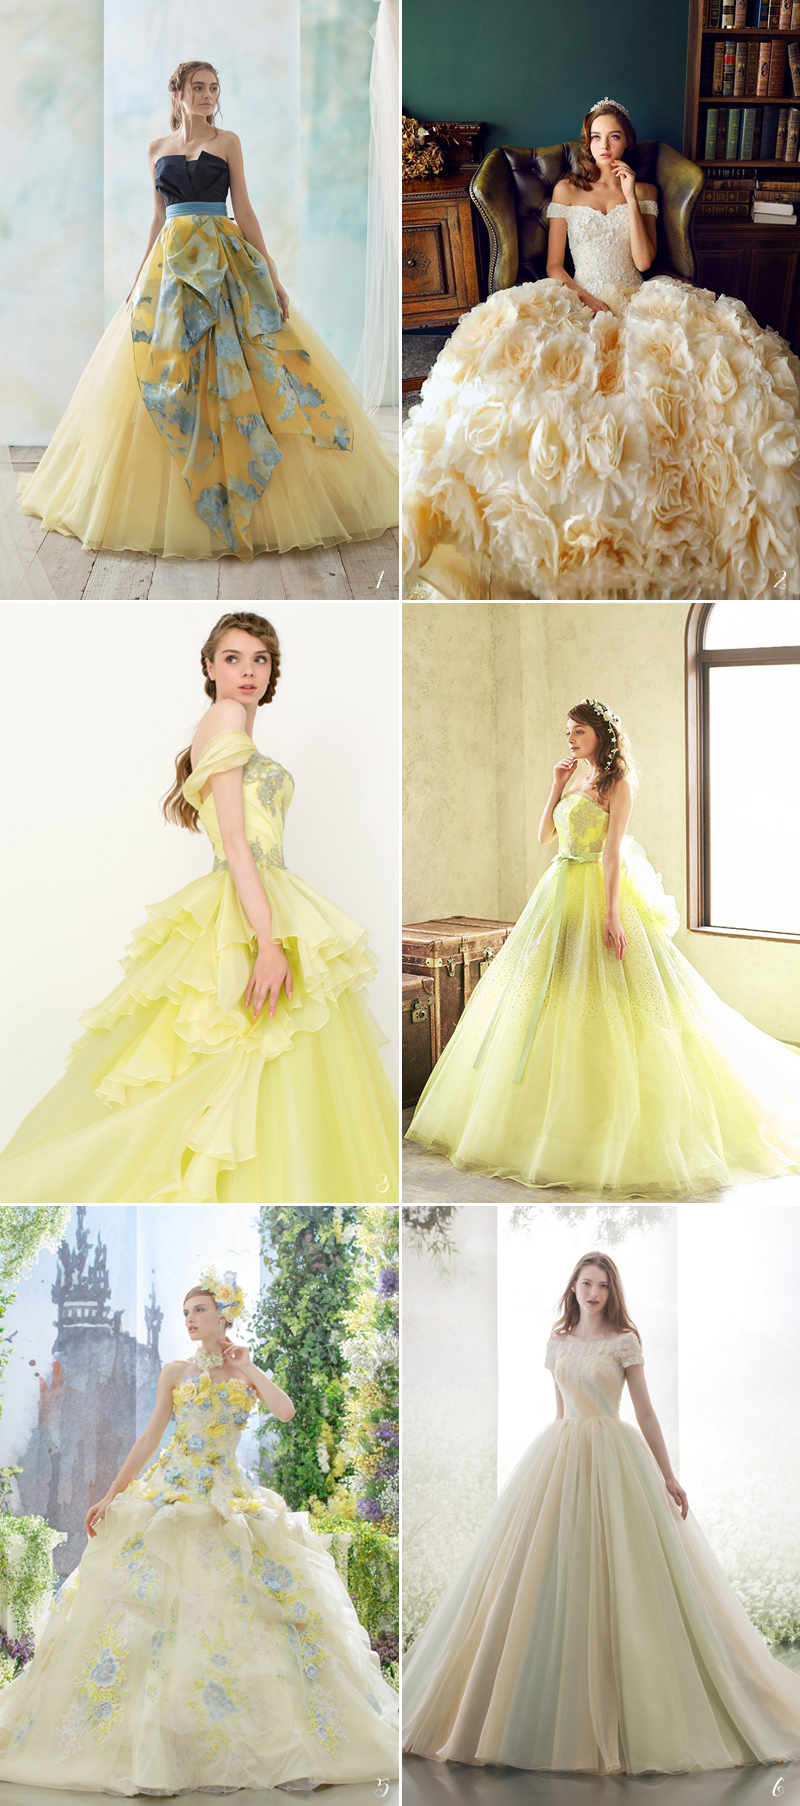 42 Fairy Tale Wedding Dresses For The Disney Princess Bride! - Praise